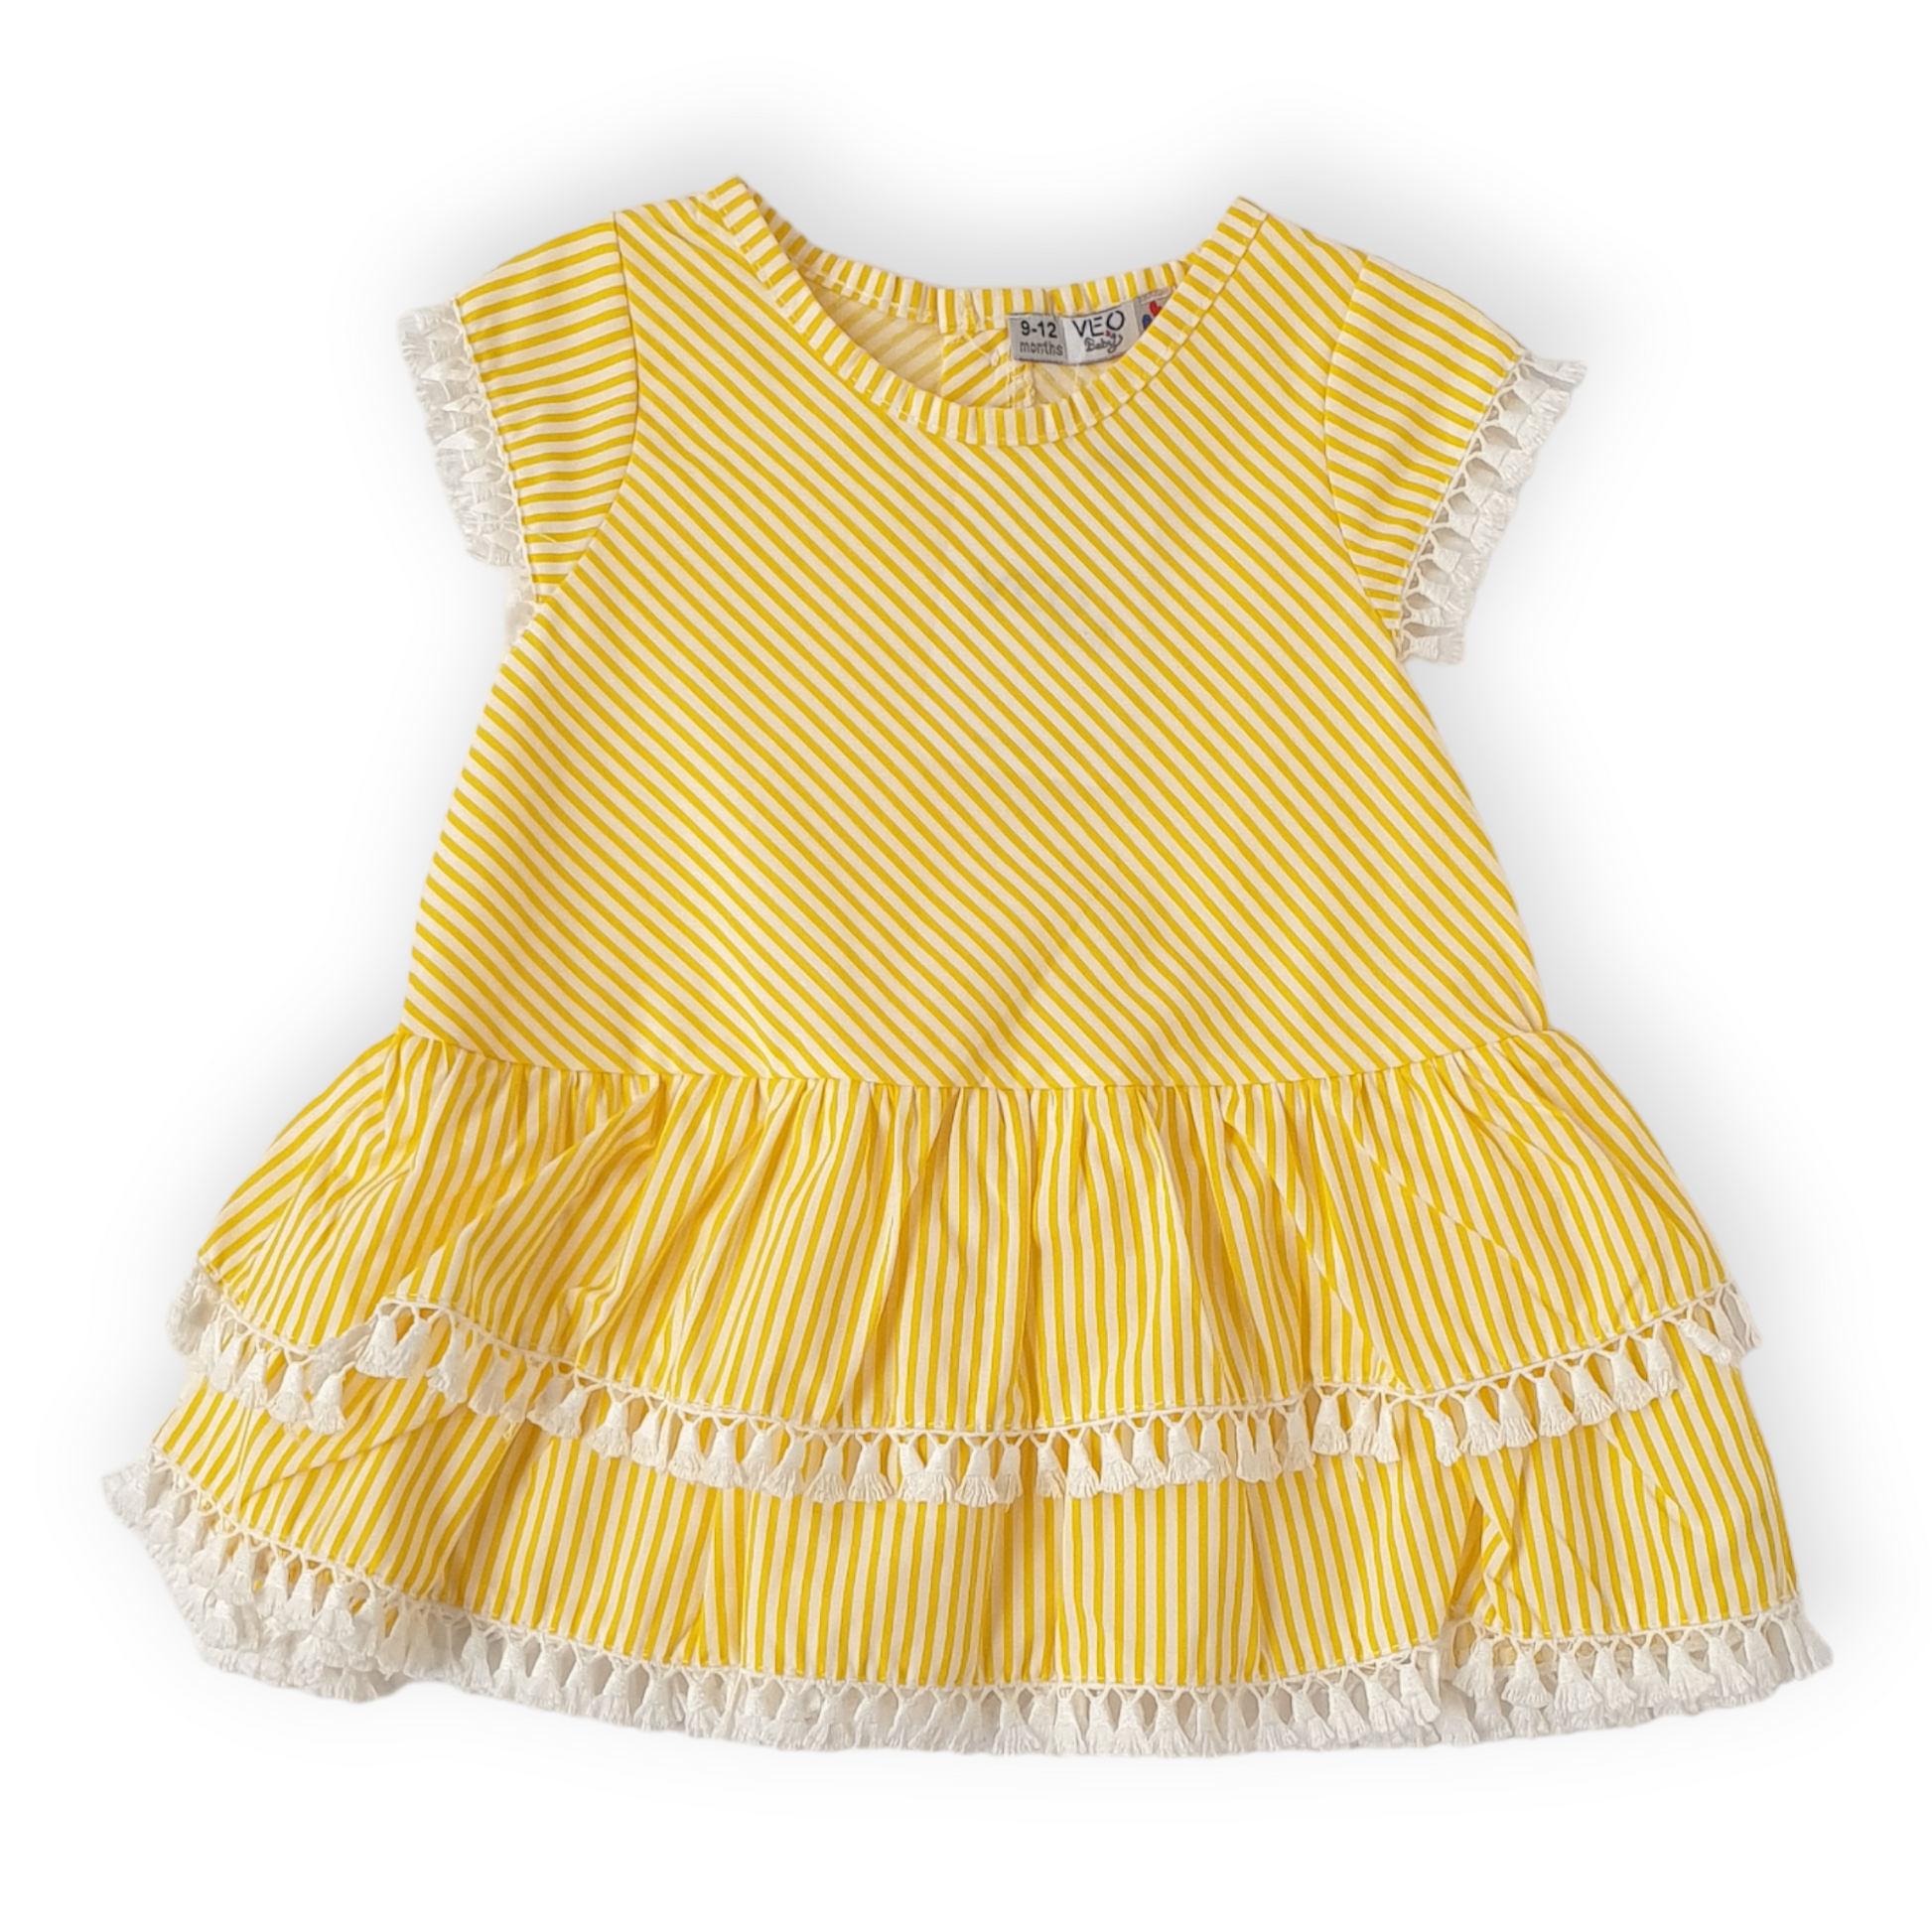 Striped Yellow Summer Dress